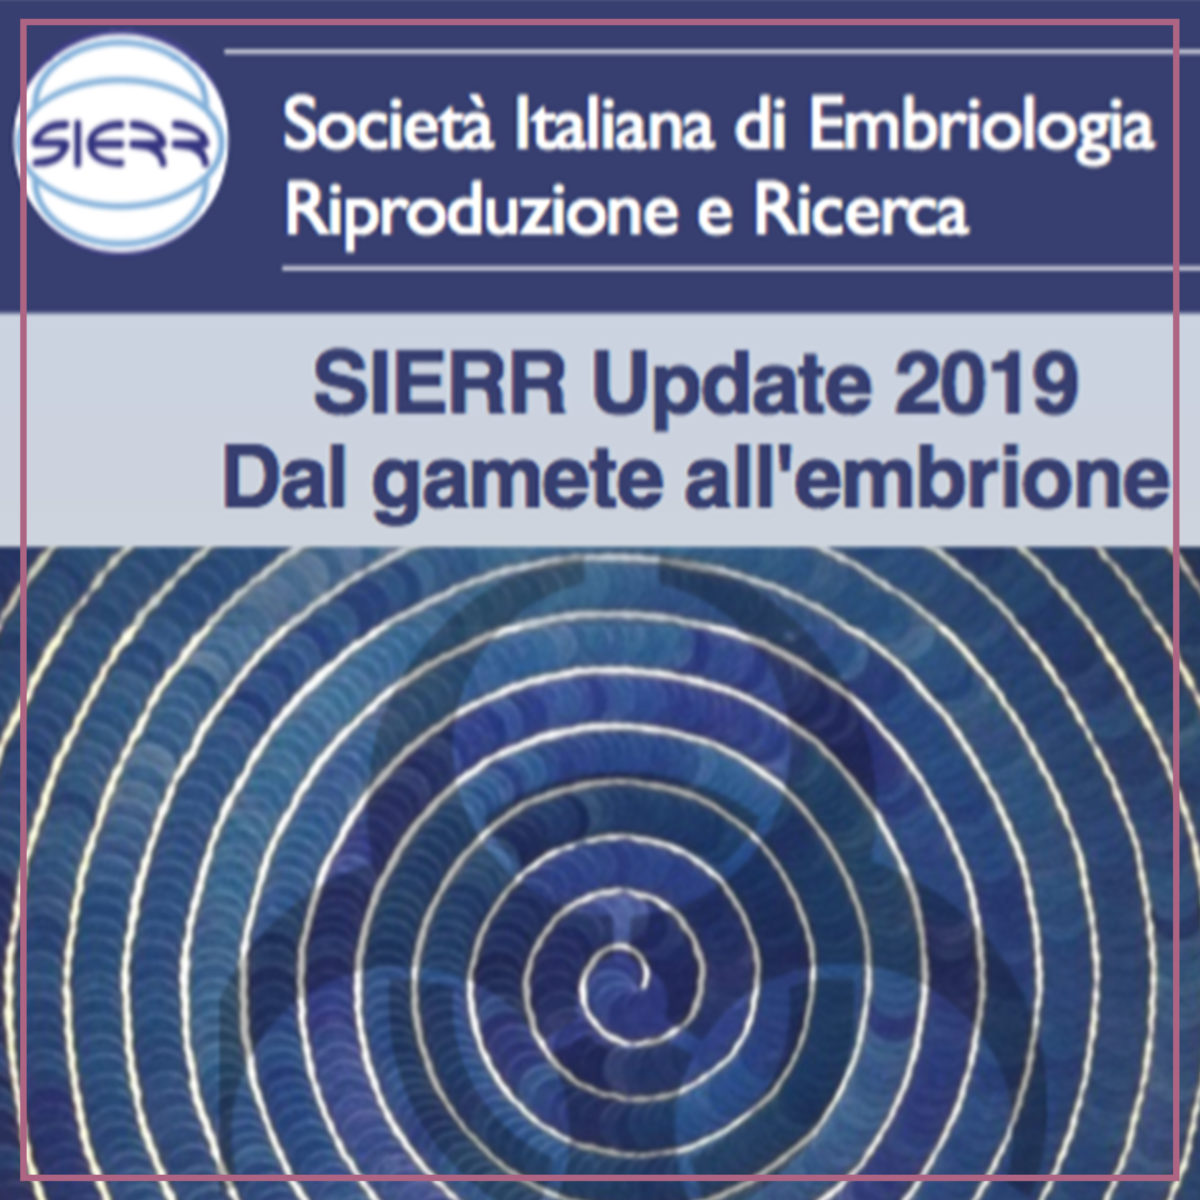 SIERR-Update-2019-dal-gamete-all’embrione-Roma-25-ottobre-2019.-Tra-i-discussant-la-Dr.ssa-Gemma-Fabozzi-1200x1200.jpg